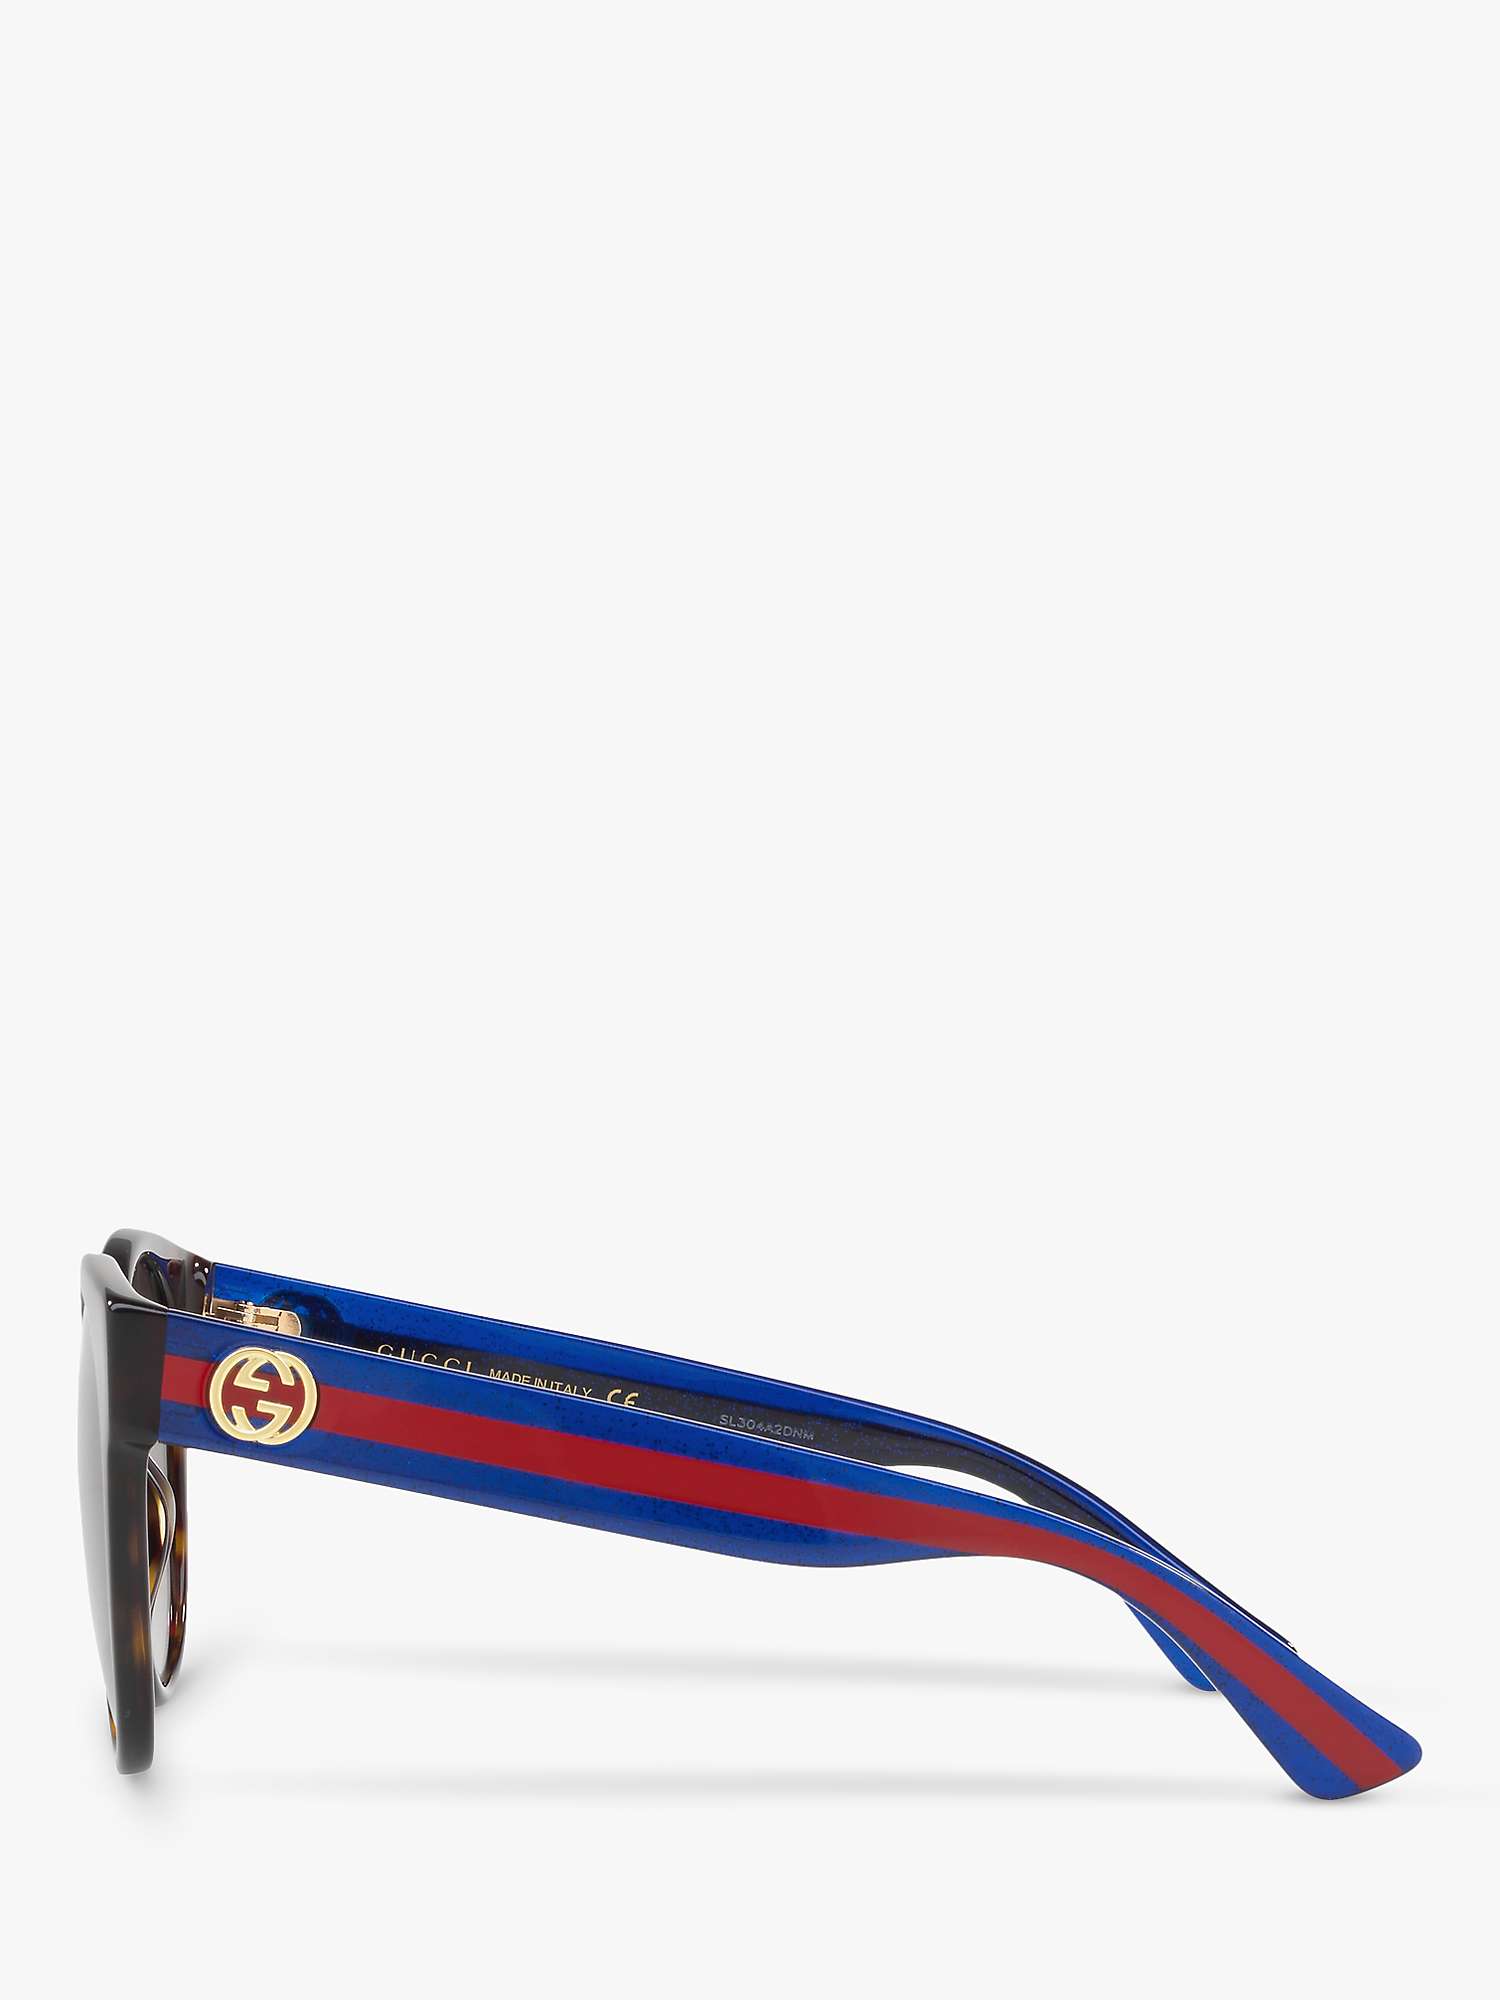 Buy Gucci GG0035SN Women's Round Sunglasses, Brown/Blue/Grey Gradient Online at johnlewis.com